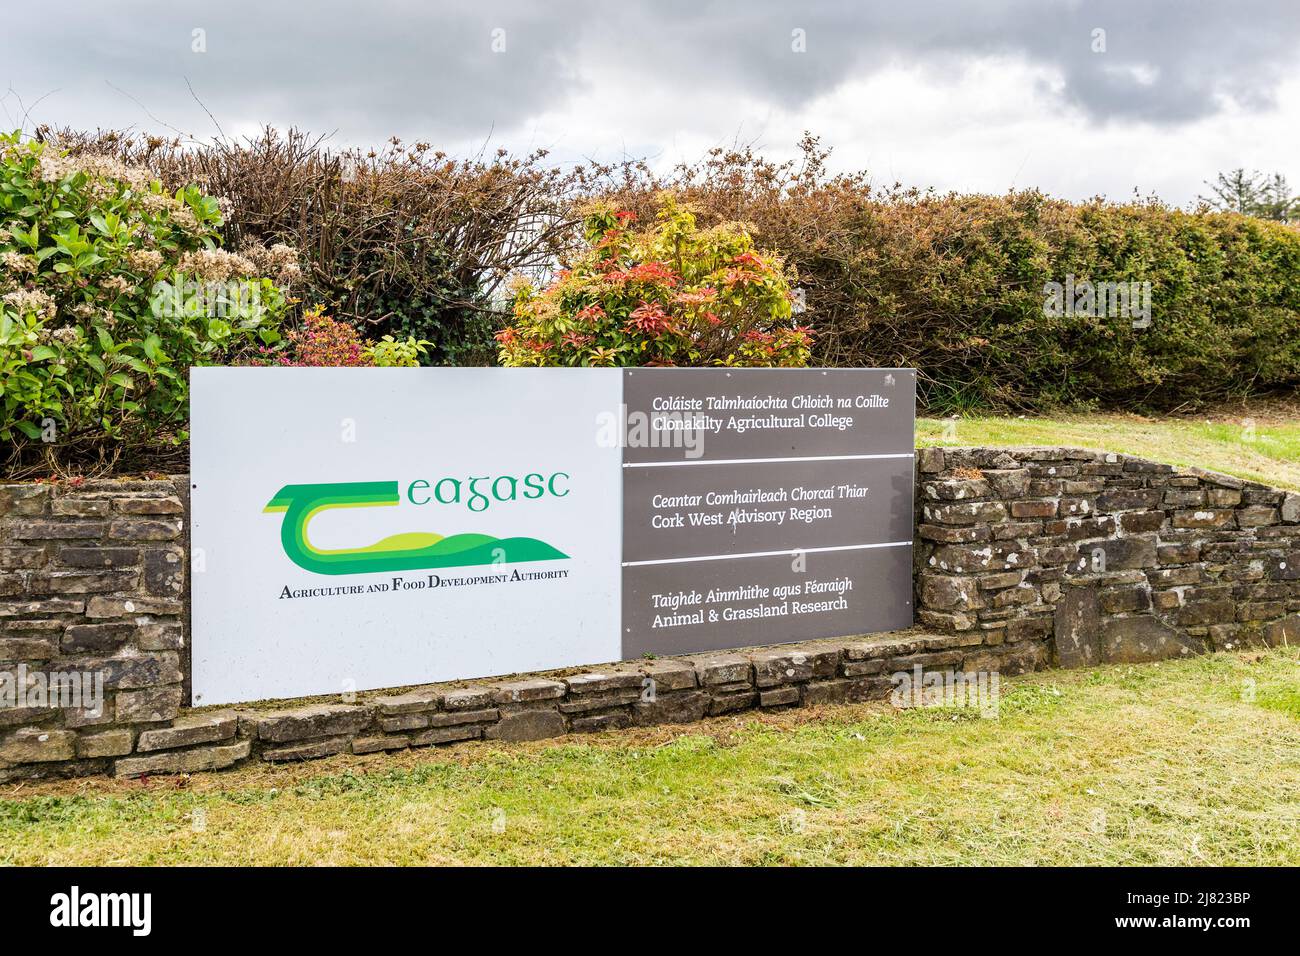 Entrée au Clonakilty Agricultural College, Darrara, Clonakilty, West Cork, Irlande. Banque D'Images